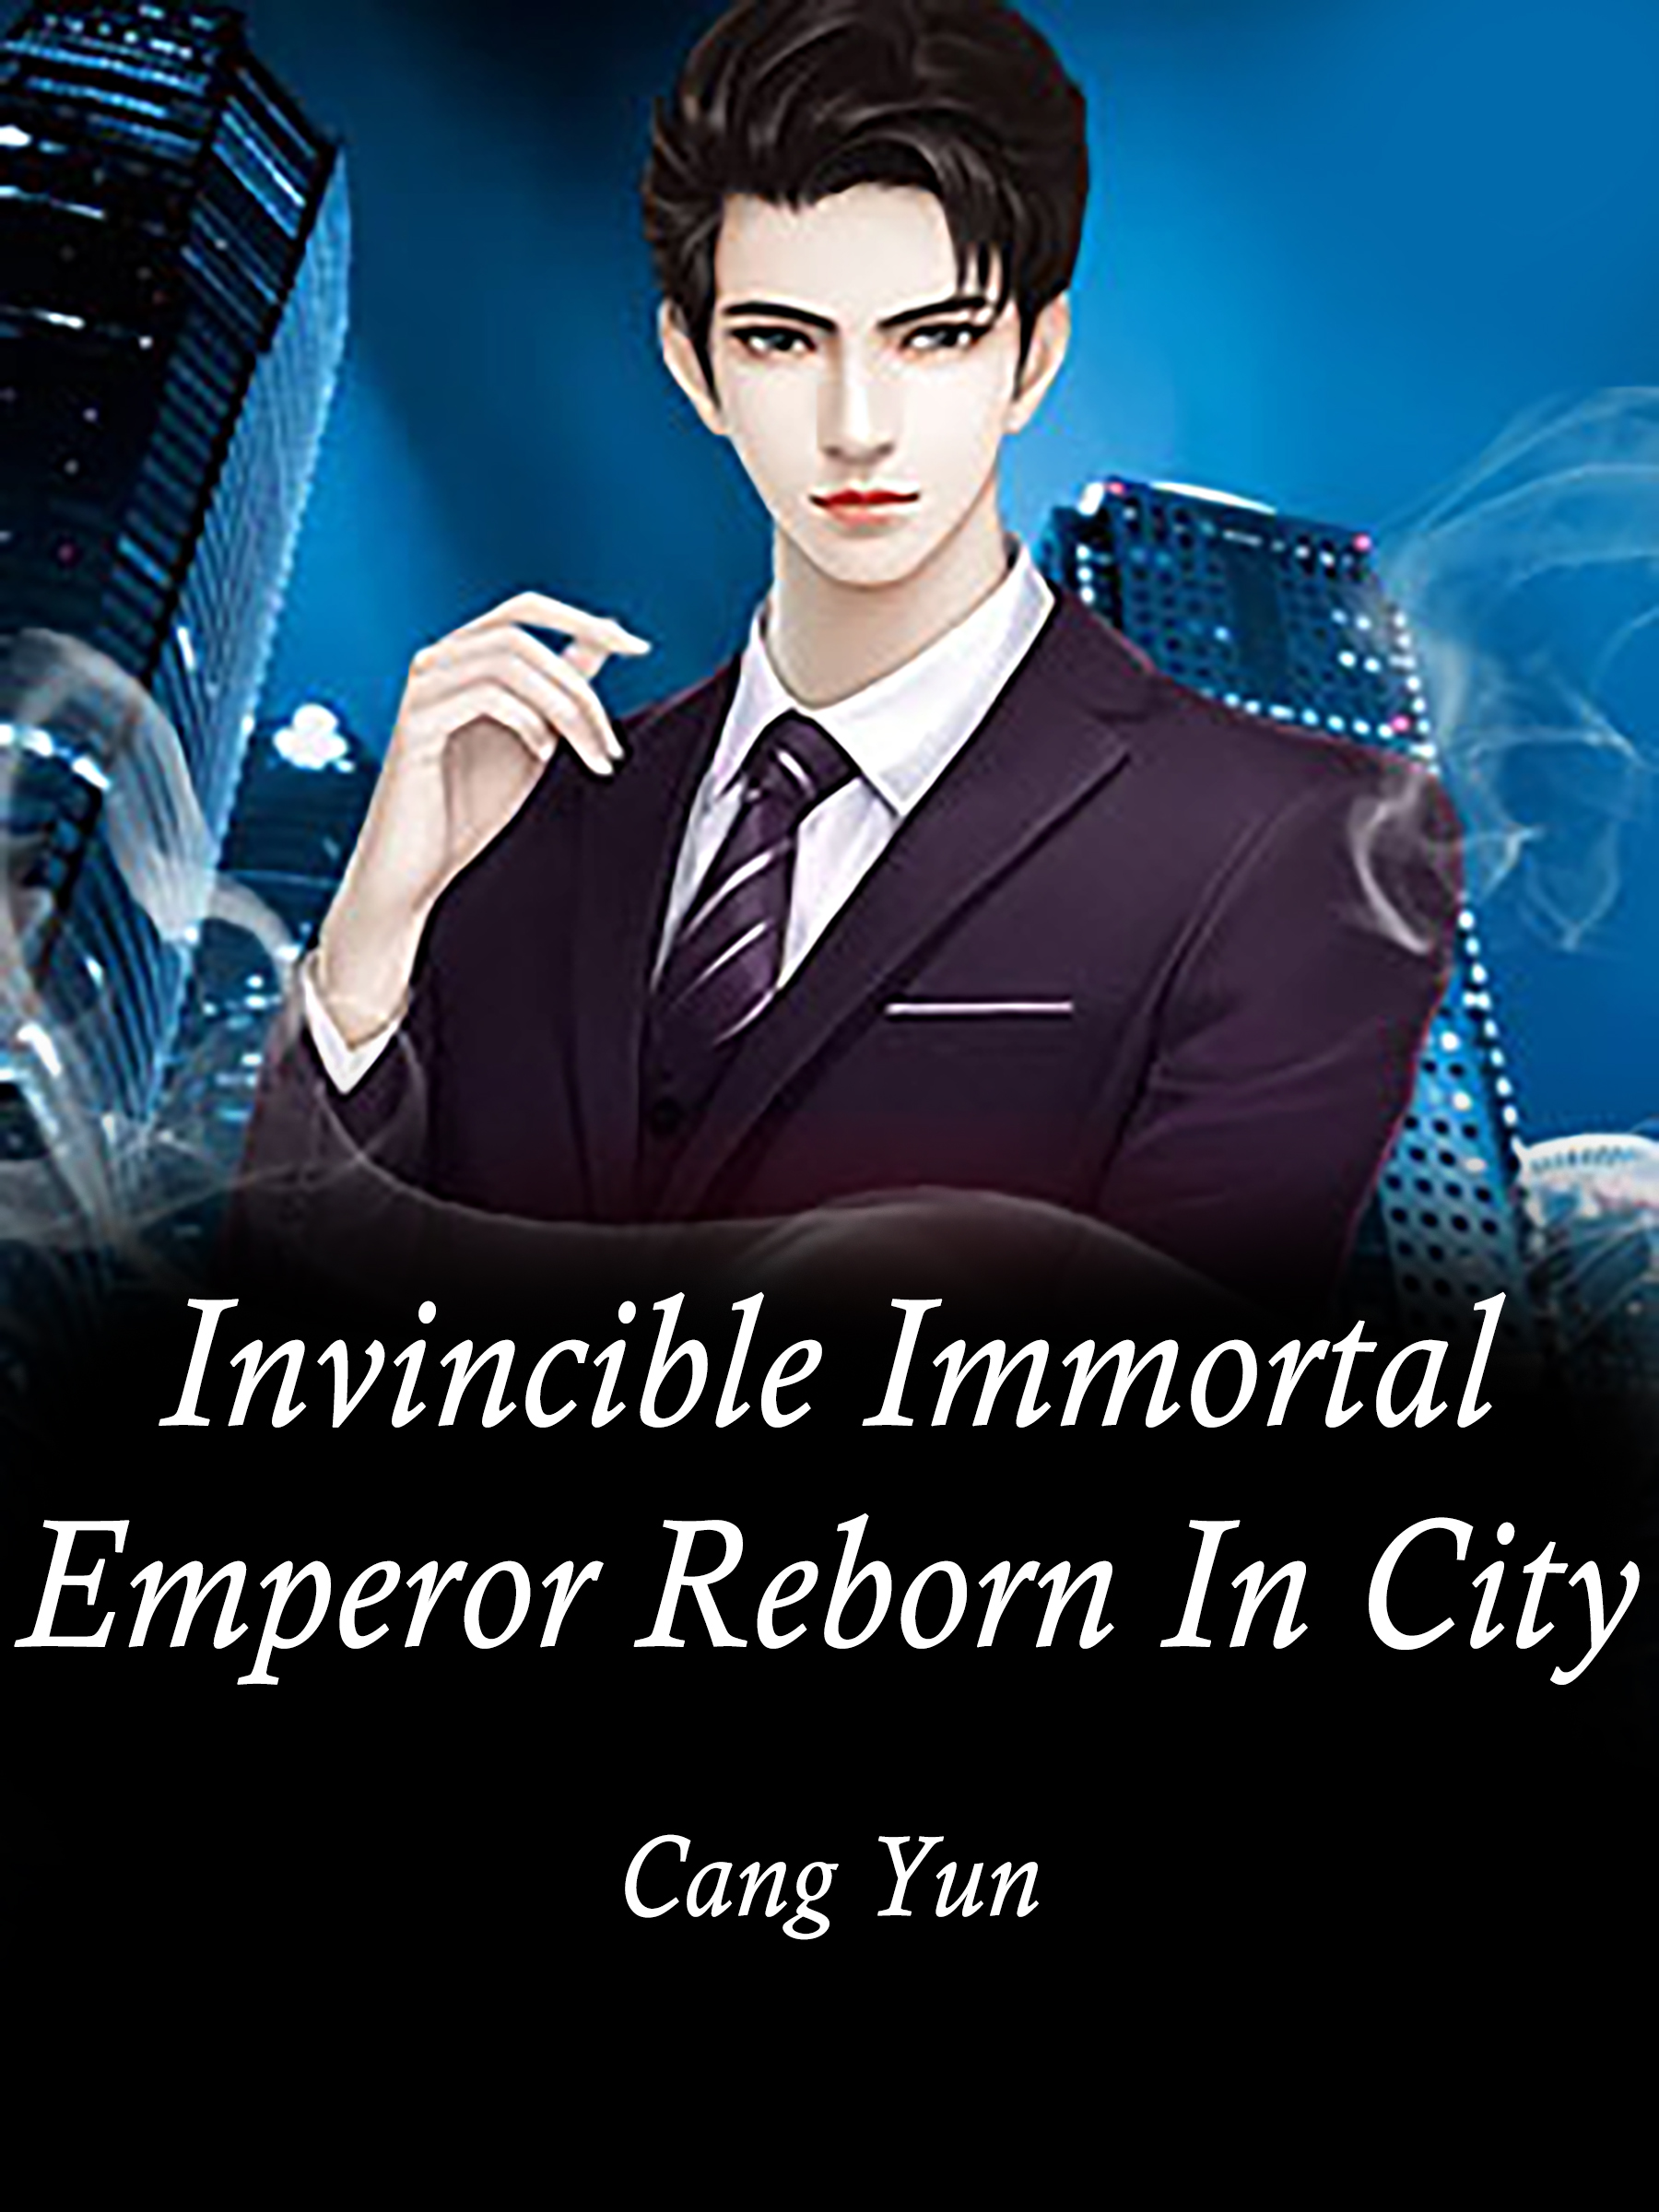 Read Immortal Emperor: Reborn in the Mixed City RAW English